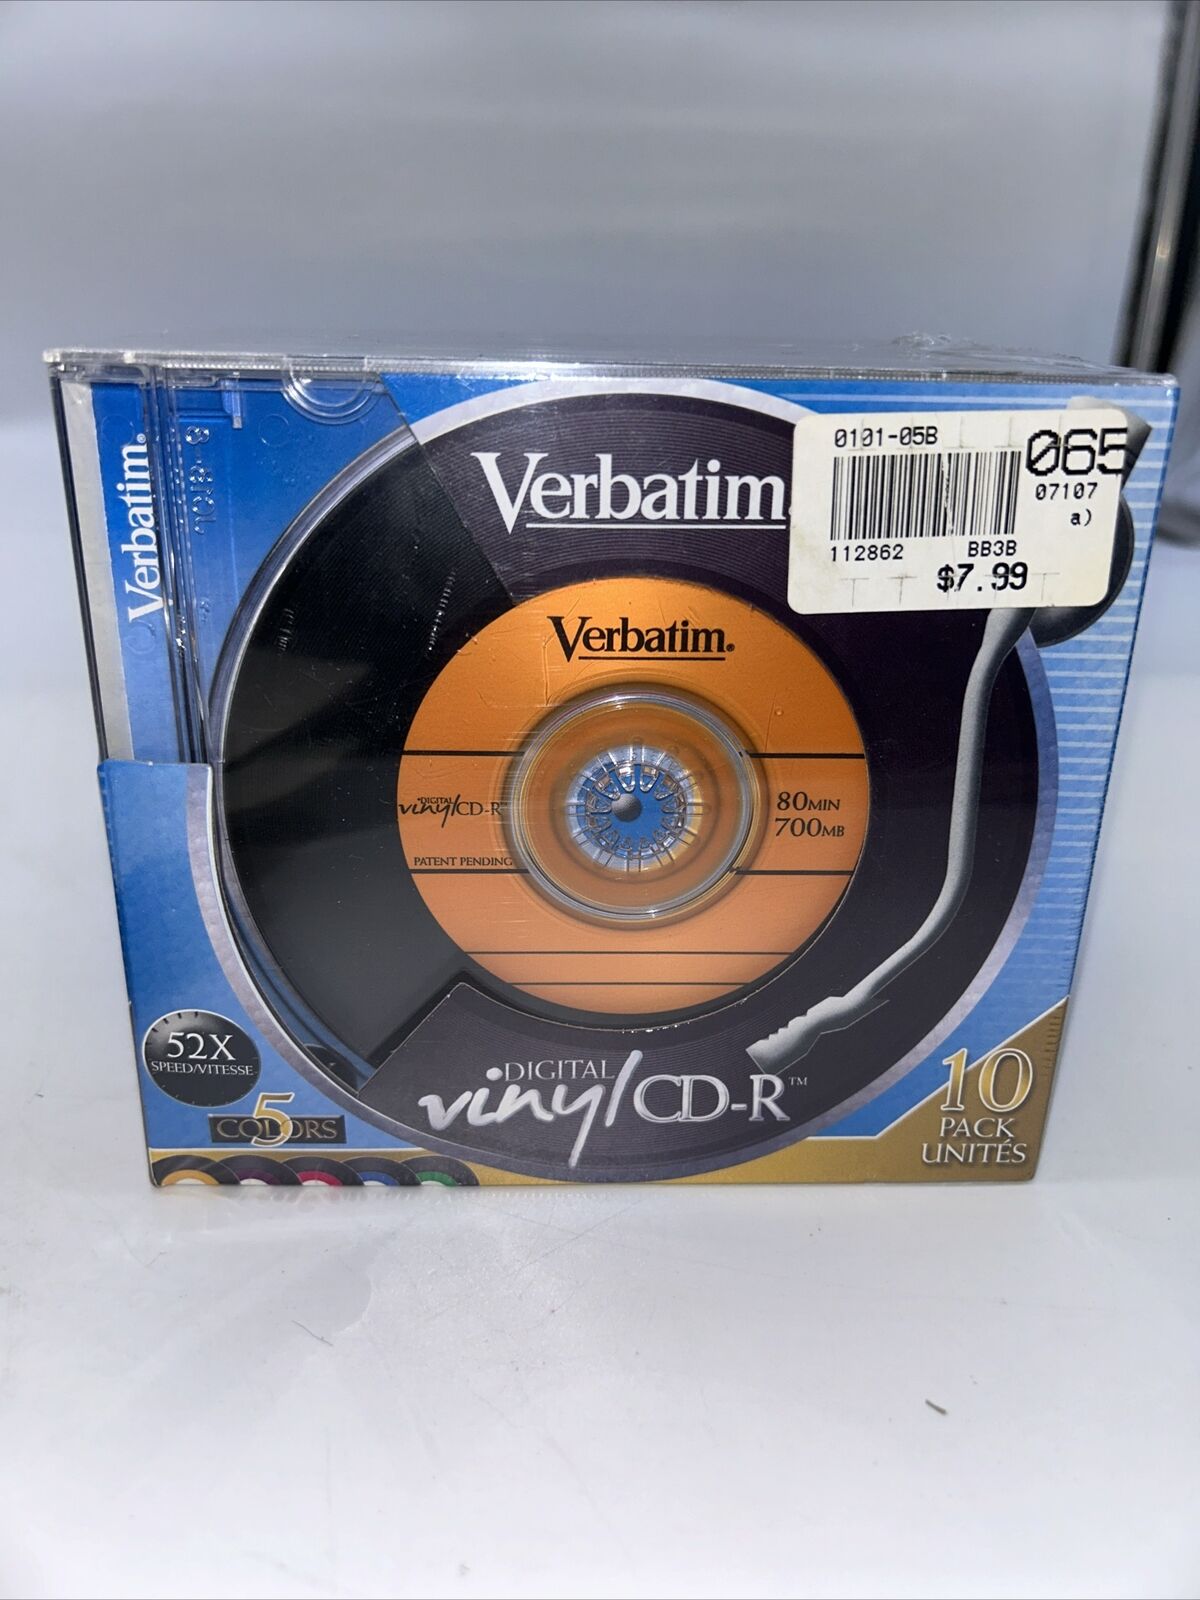 Verbatim CD-R 80min 52X with Digital Vinyl Surface New Sealed Package